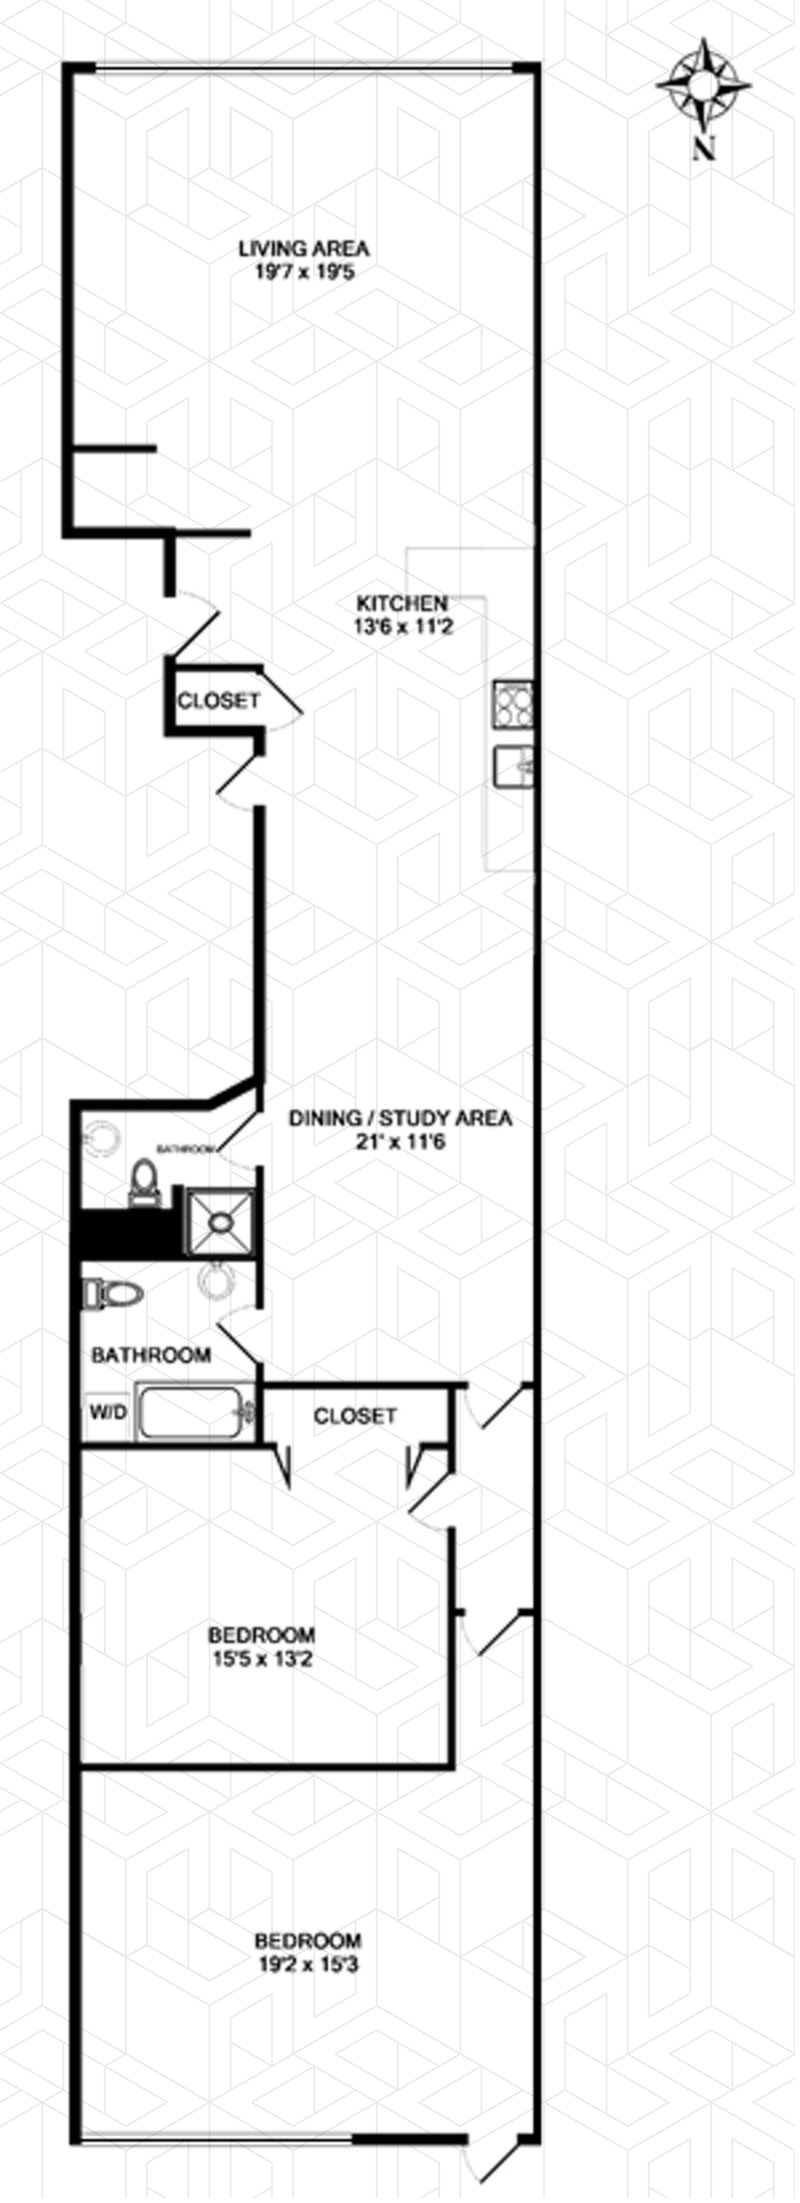 Floorplan for 215 West, 29th Street, 2